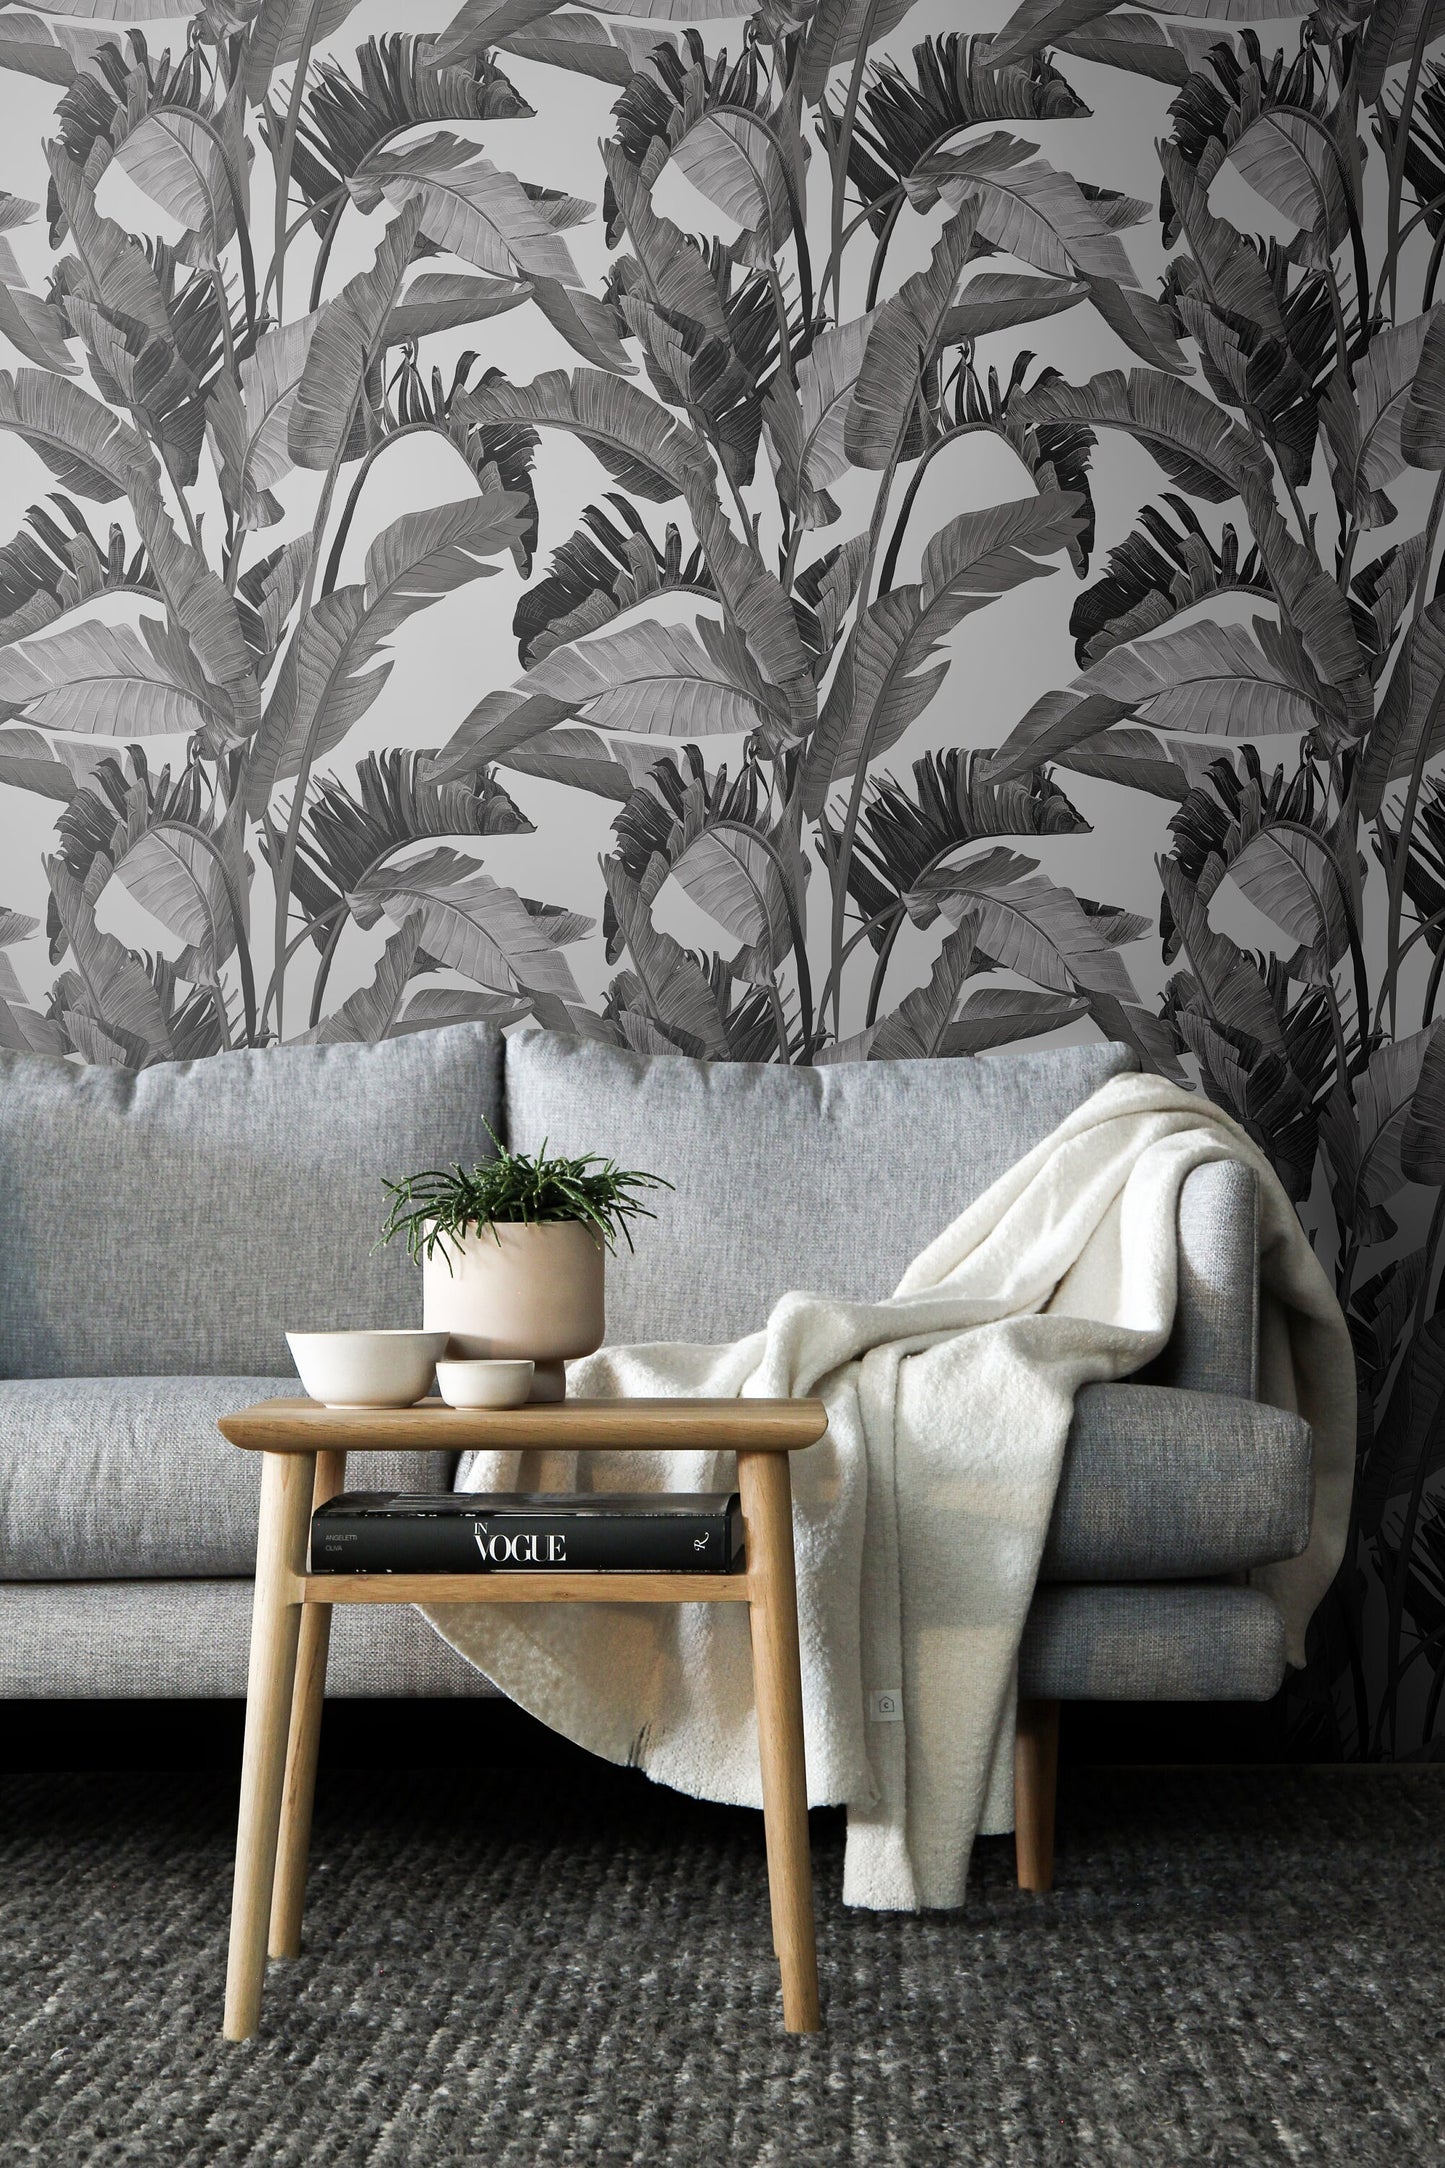 Black & White Tropical Leaf Wallpaper